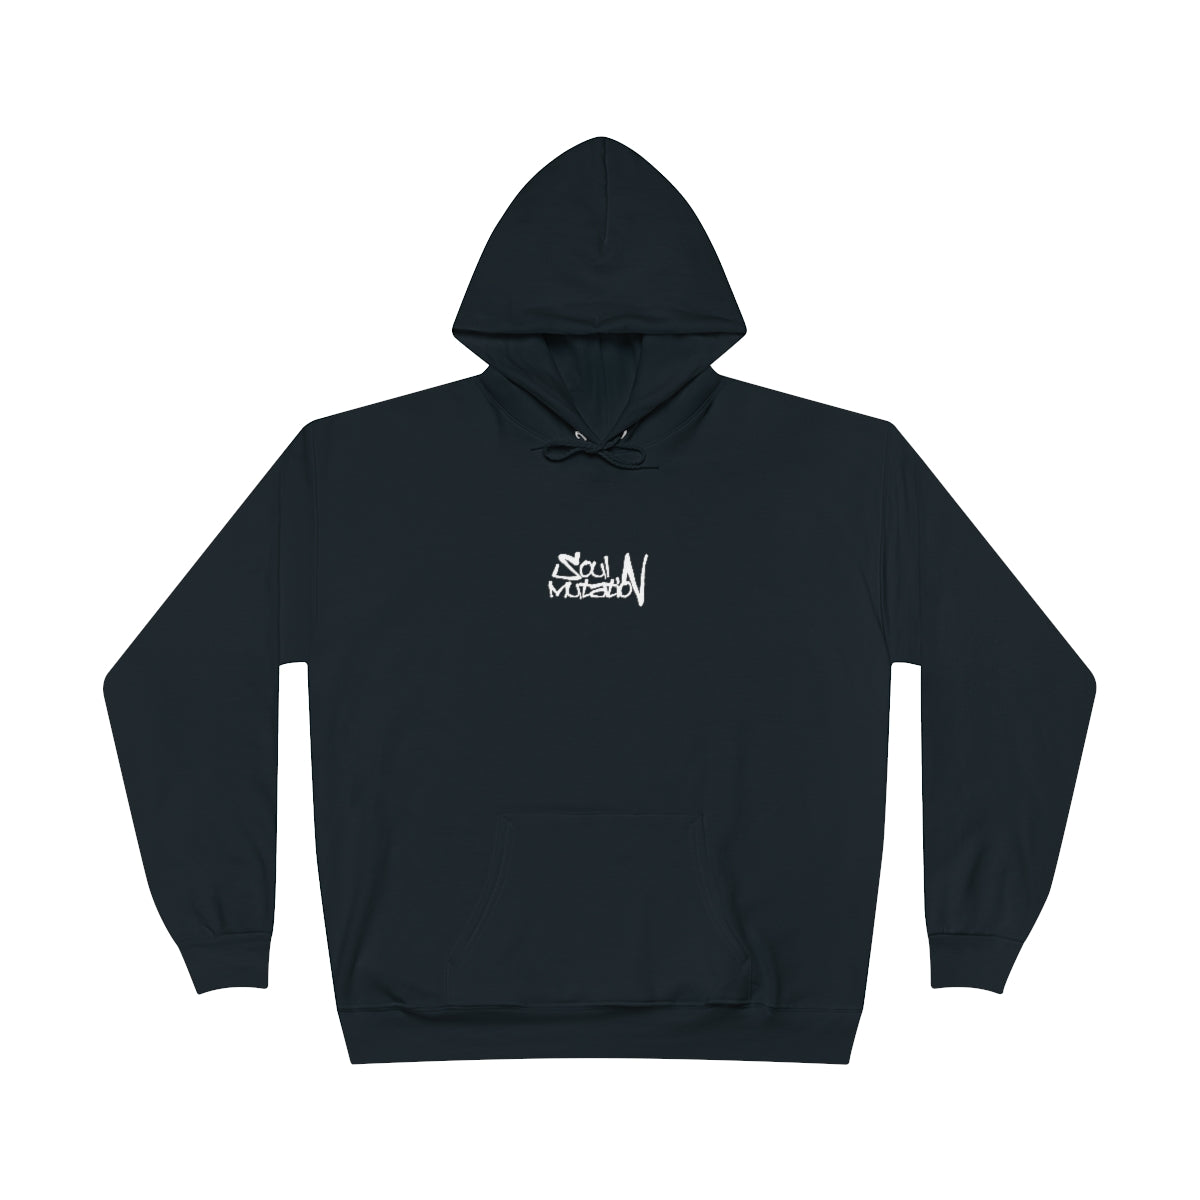 soul mutation logo hoodie